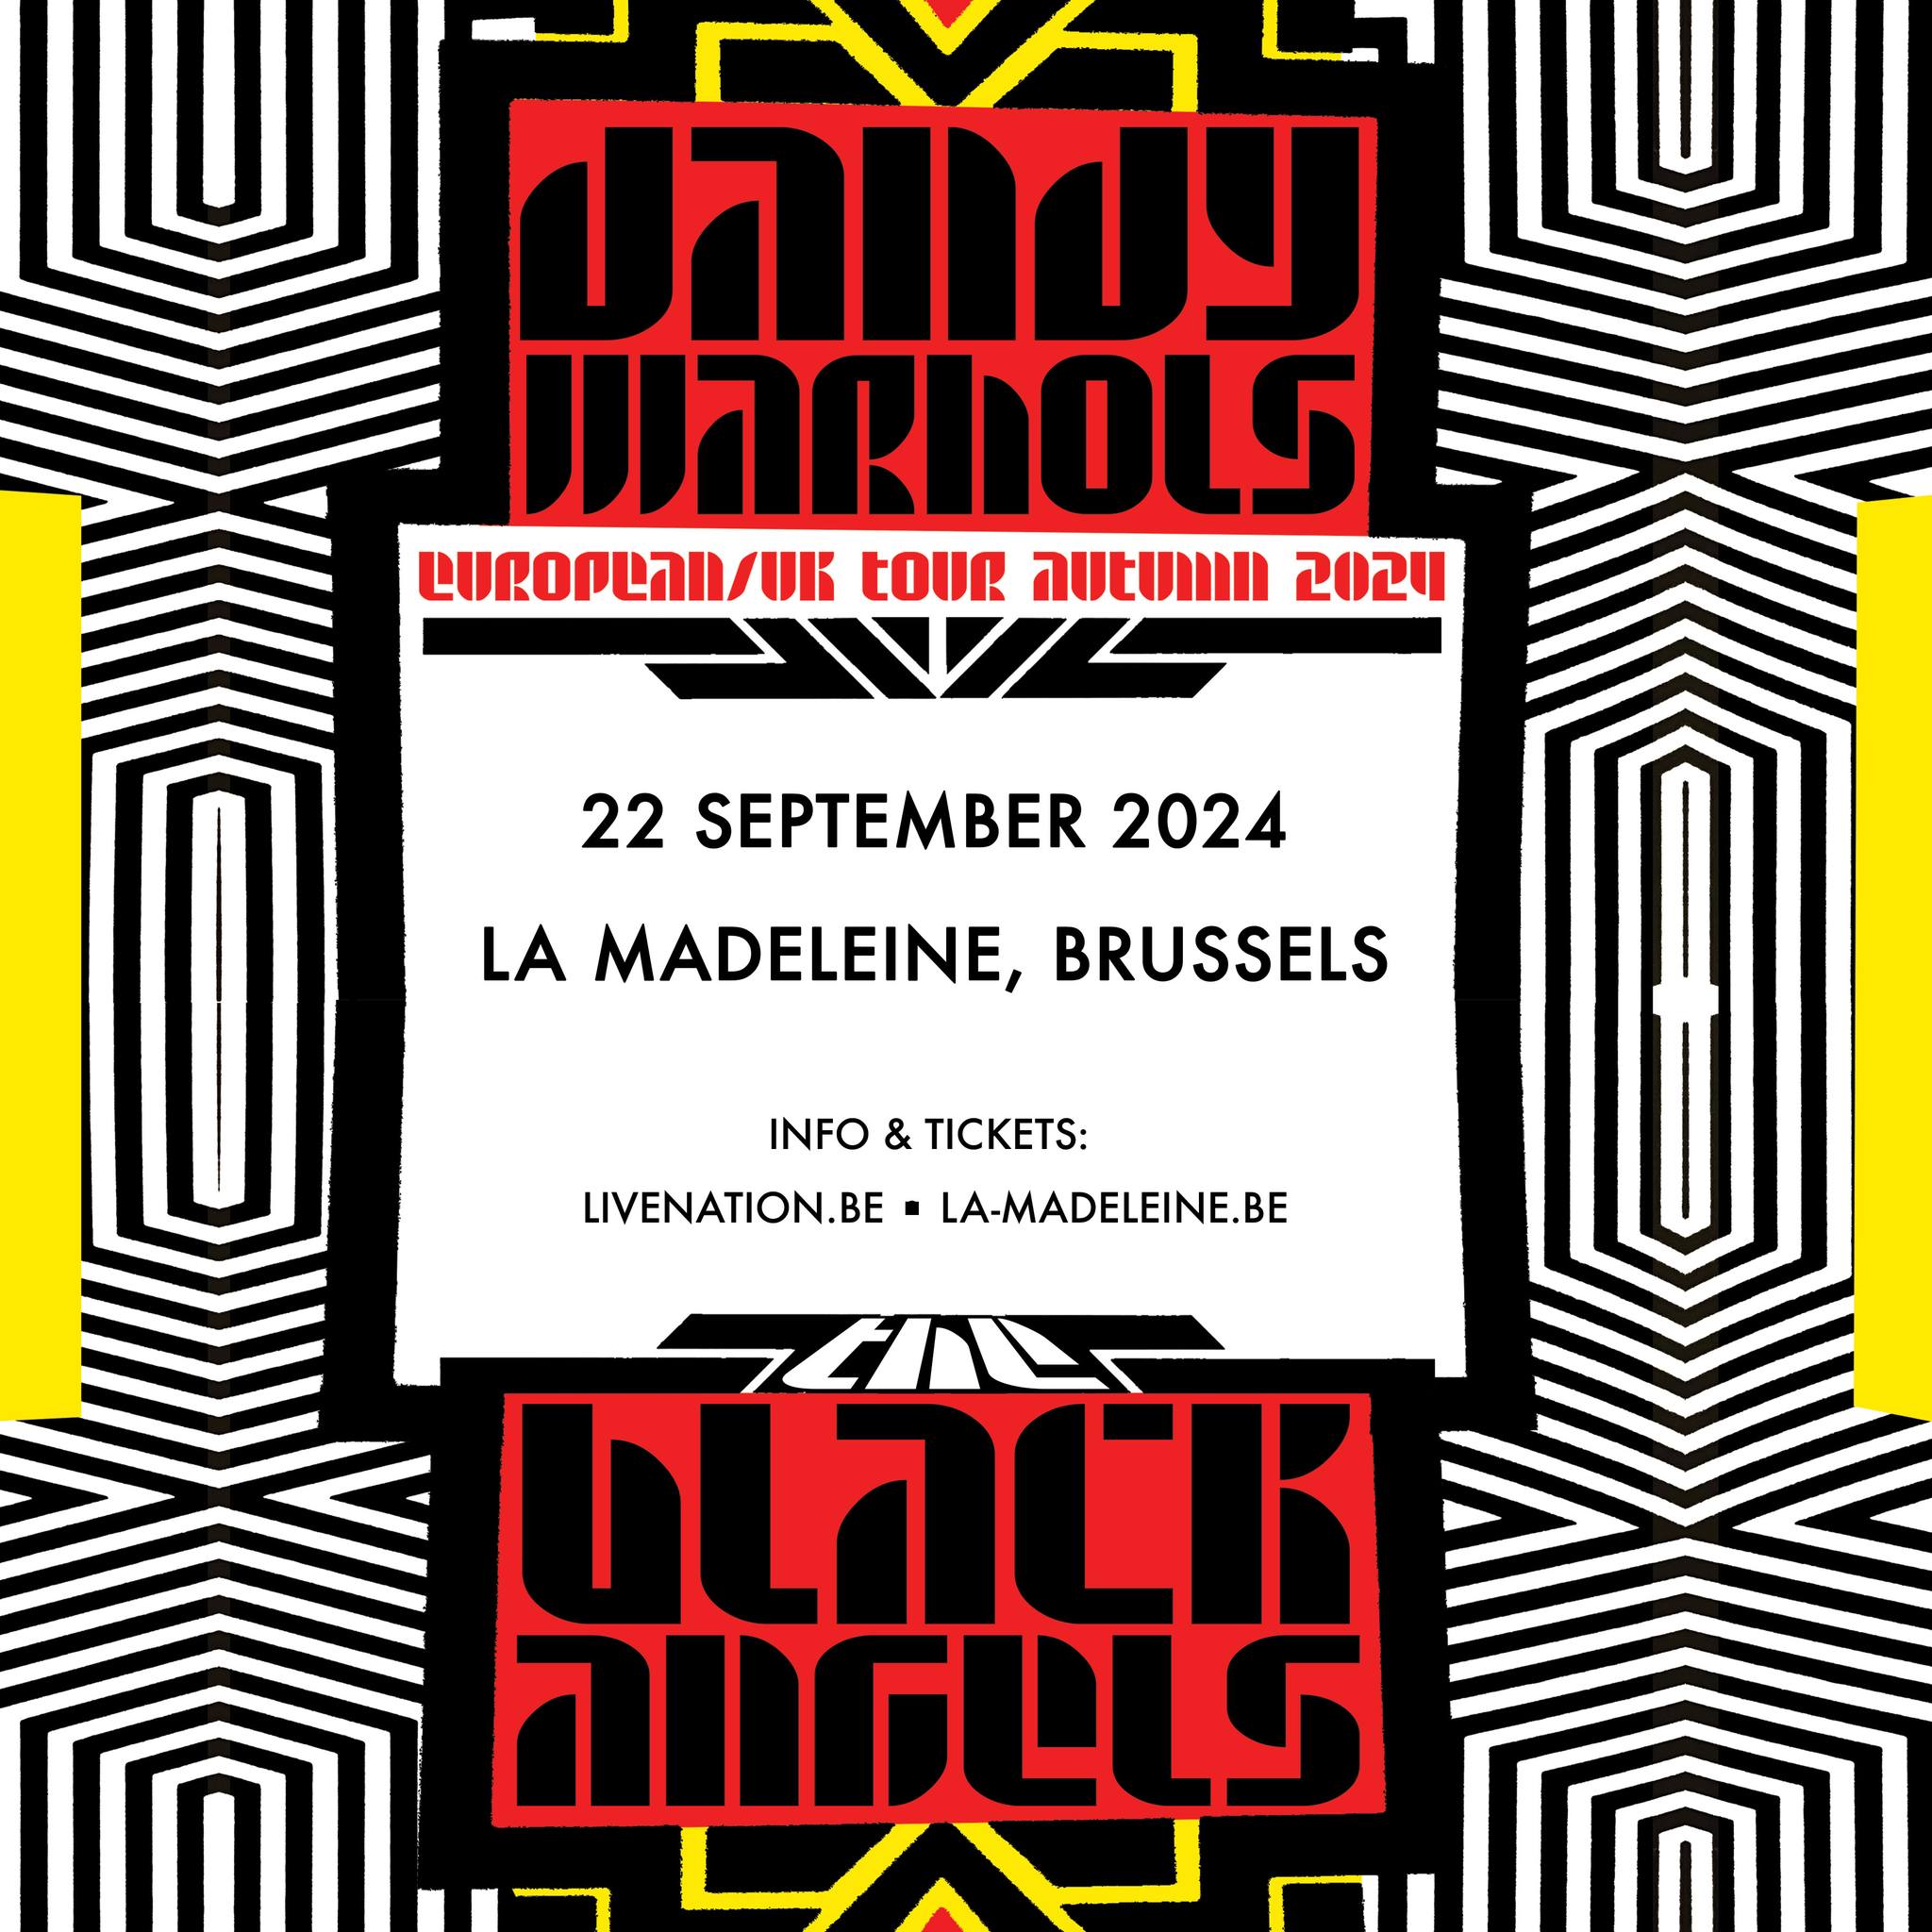 The Dandy Warhols - The Black Keys in der La Madeleine Tickets